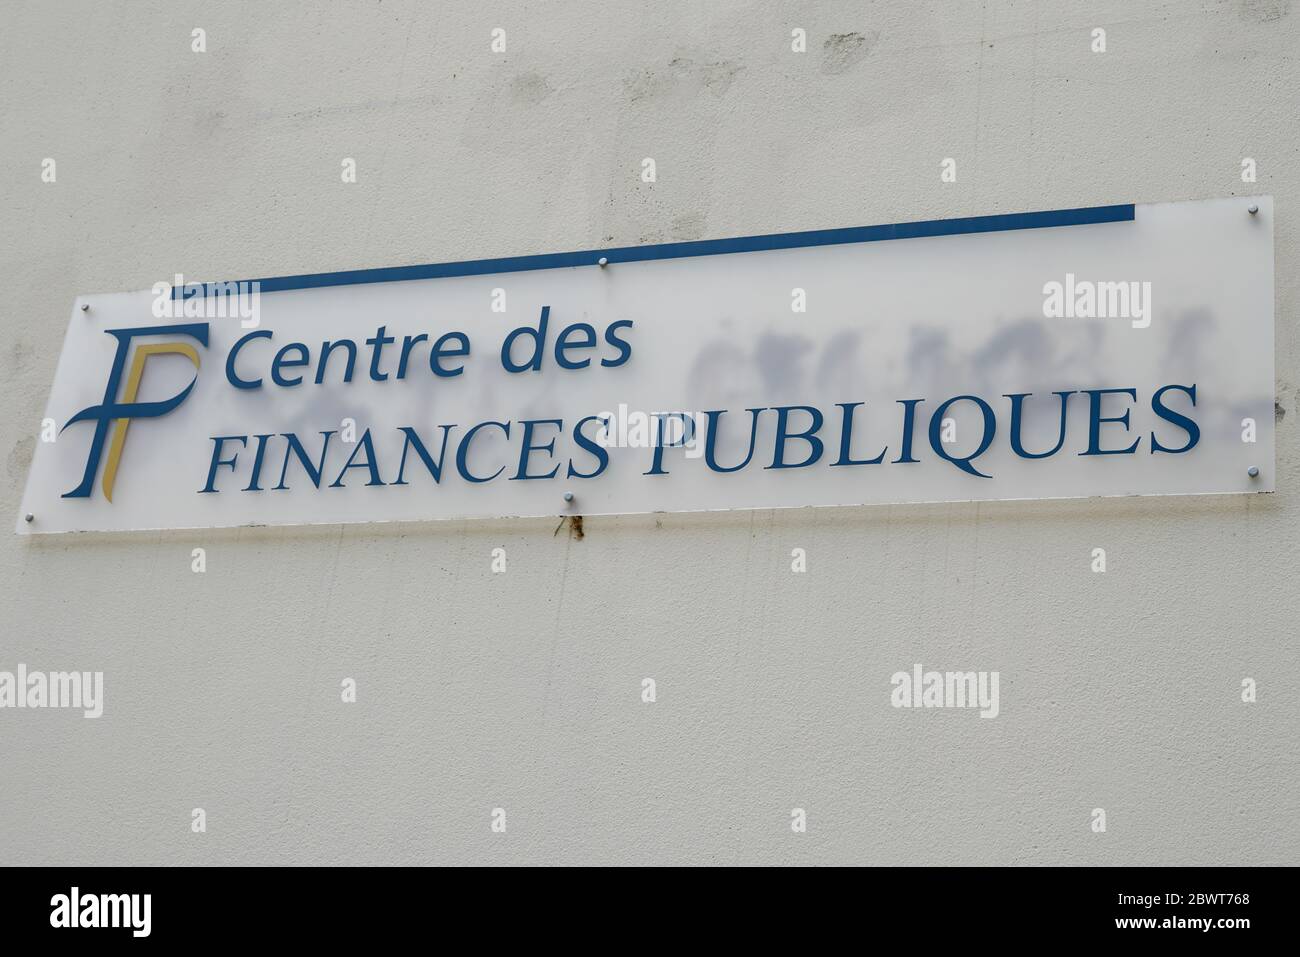 Bordeaux , Aquitaine / France - 06 01 2020 : centre des Finances Publiques logo and text sign for office of French public finance administration Stock Photo